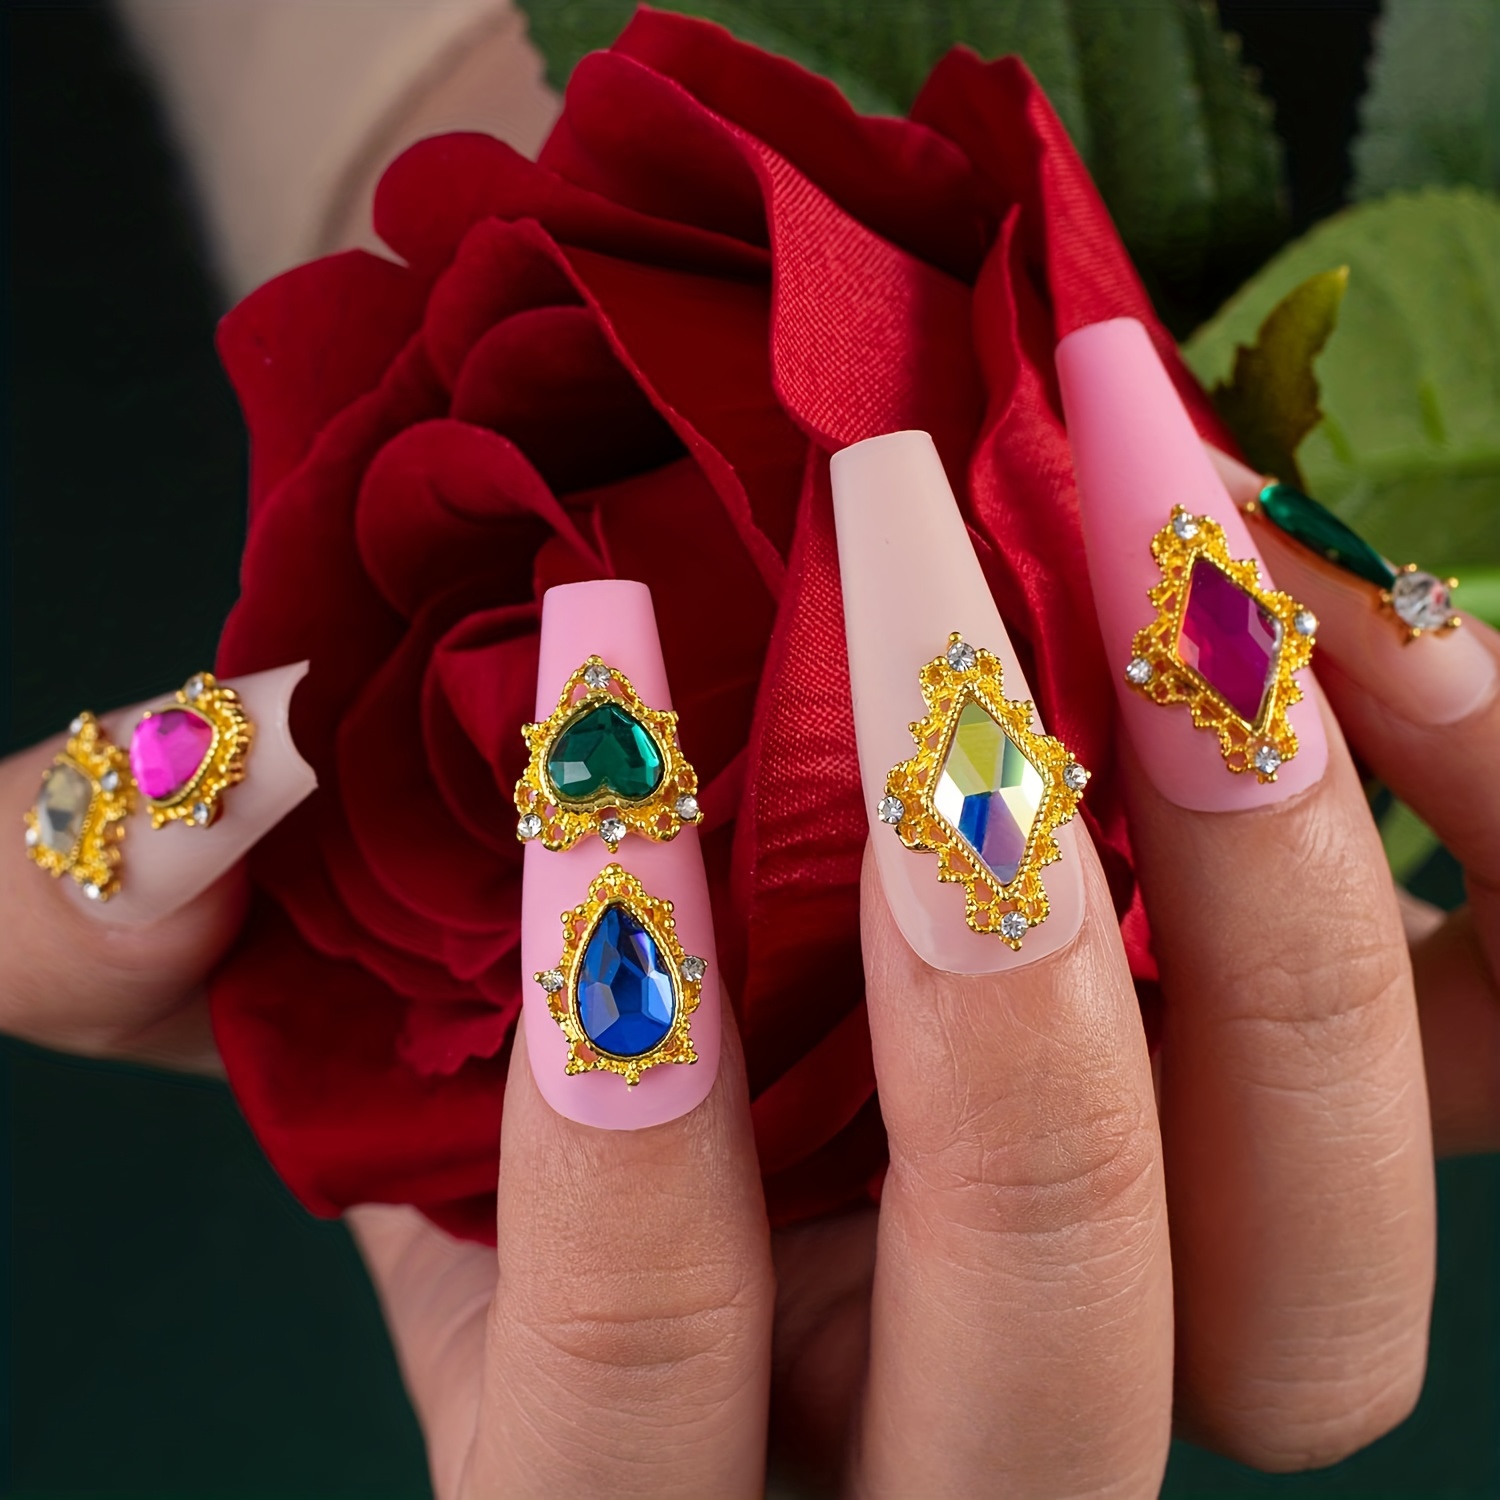 TEEKME 30pcs Sparkling Luxury Gold 3D Alloy Big Bulk Nail Charms Mix 7 Colors Crystal Rhinestone Diamond Gems for Fancy Long Nail Designs Accessory